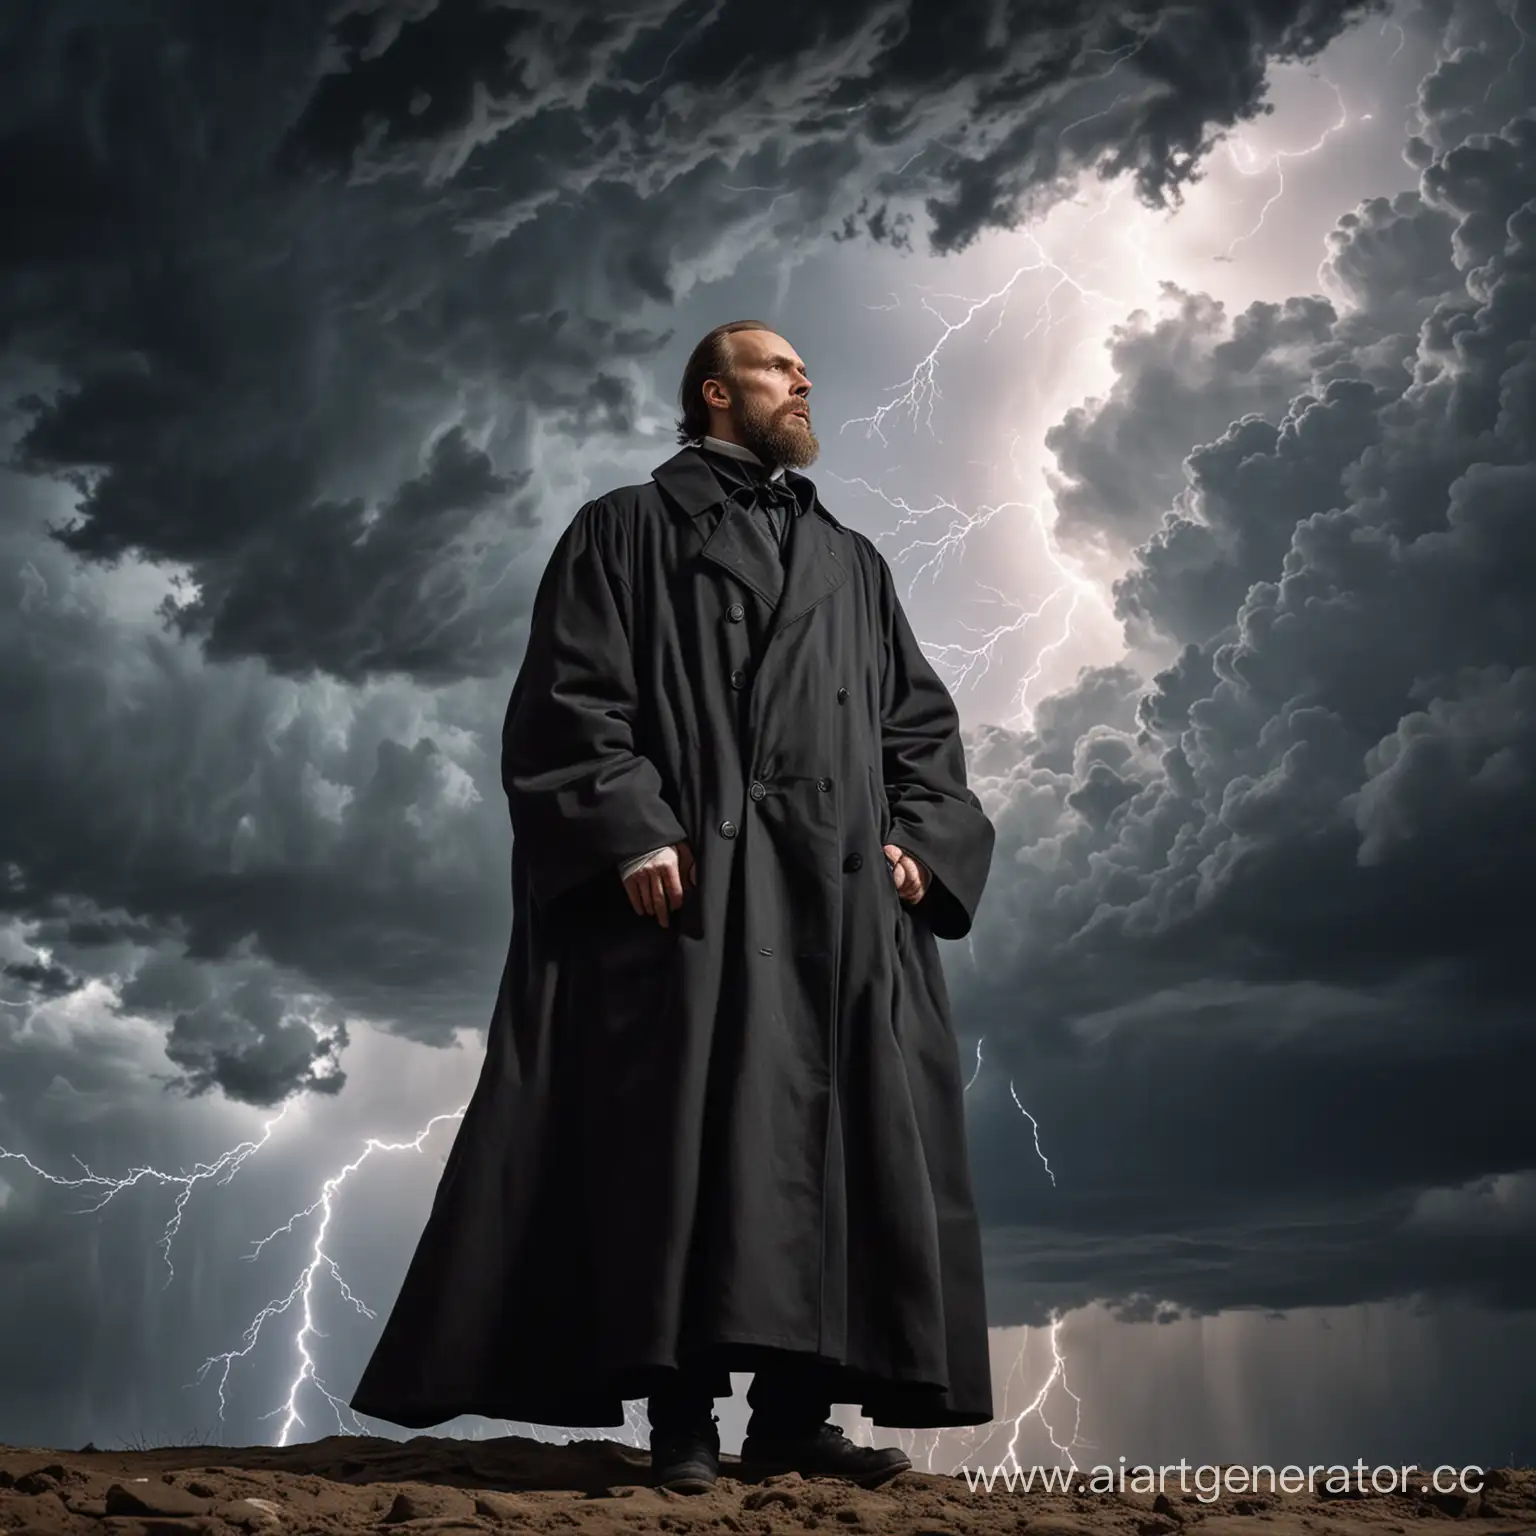 Fyodor-Mikhailovich-Dostoevsky-in-Dramatic-Stormy-Sky